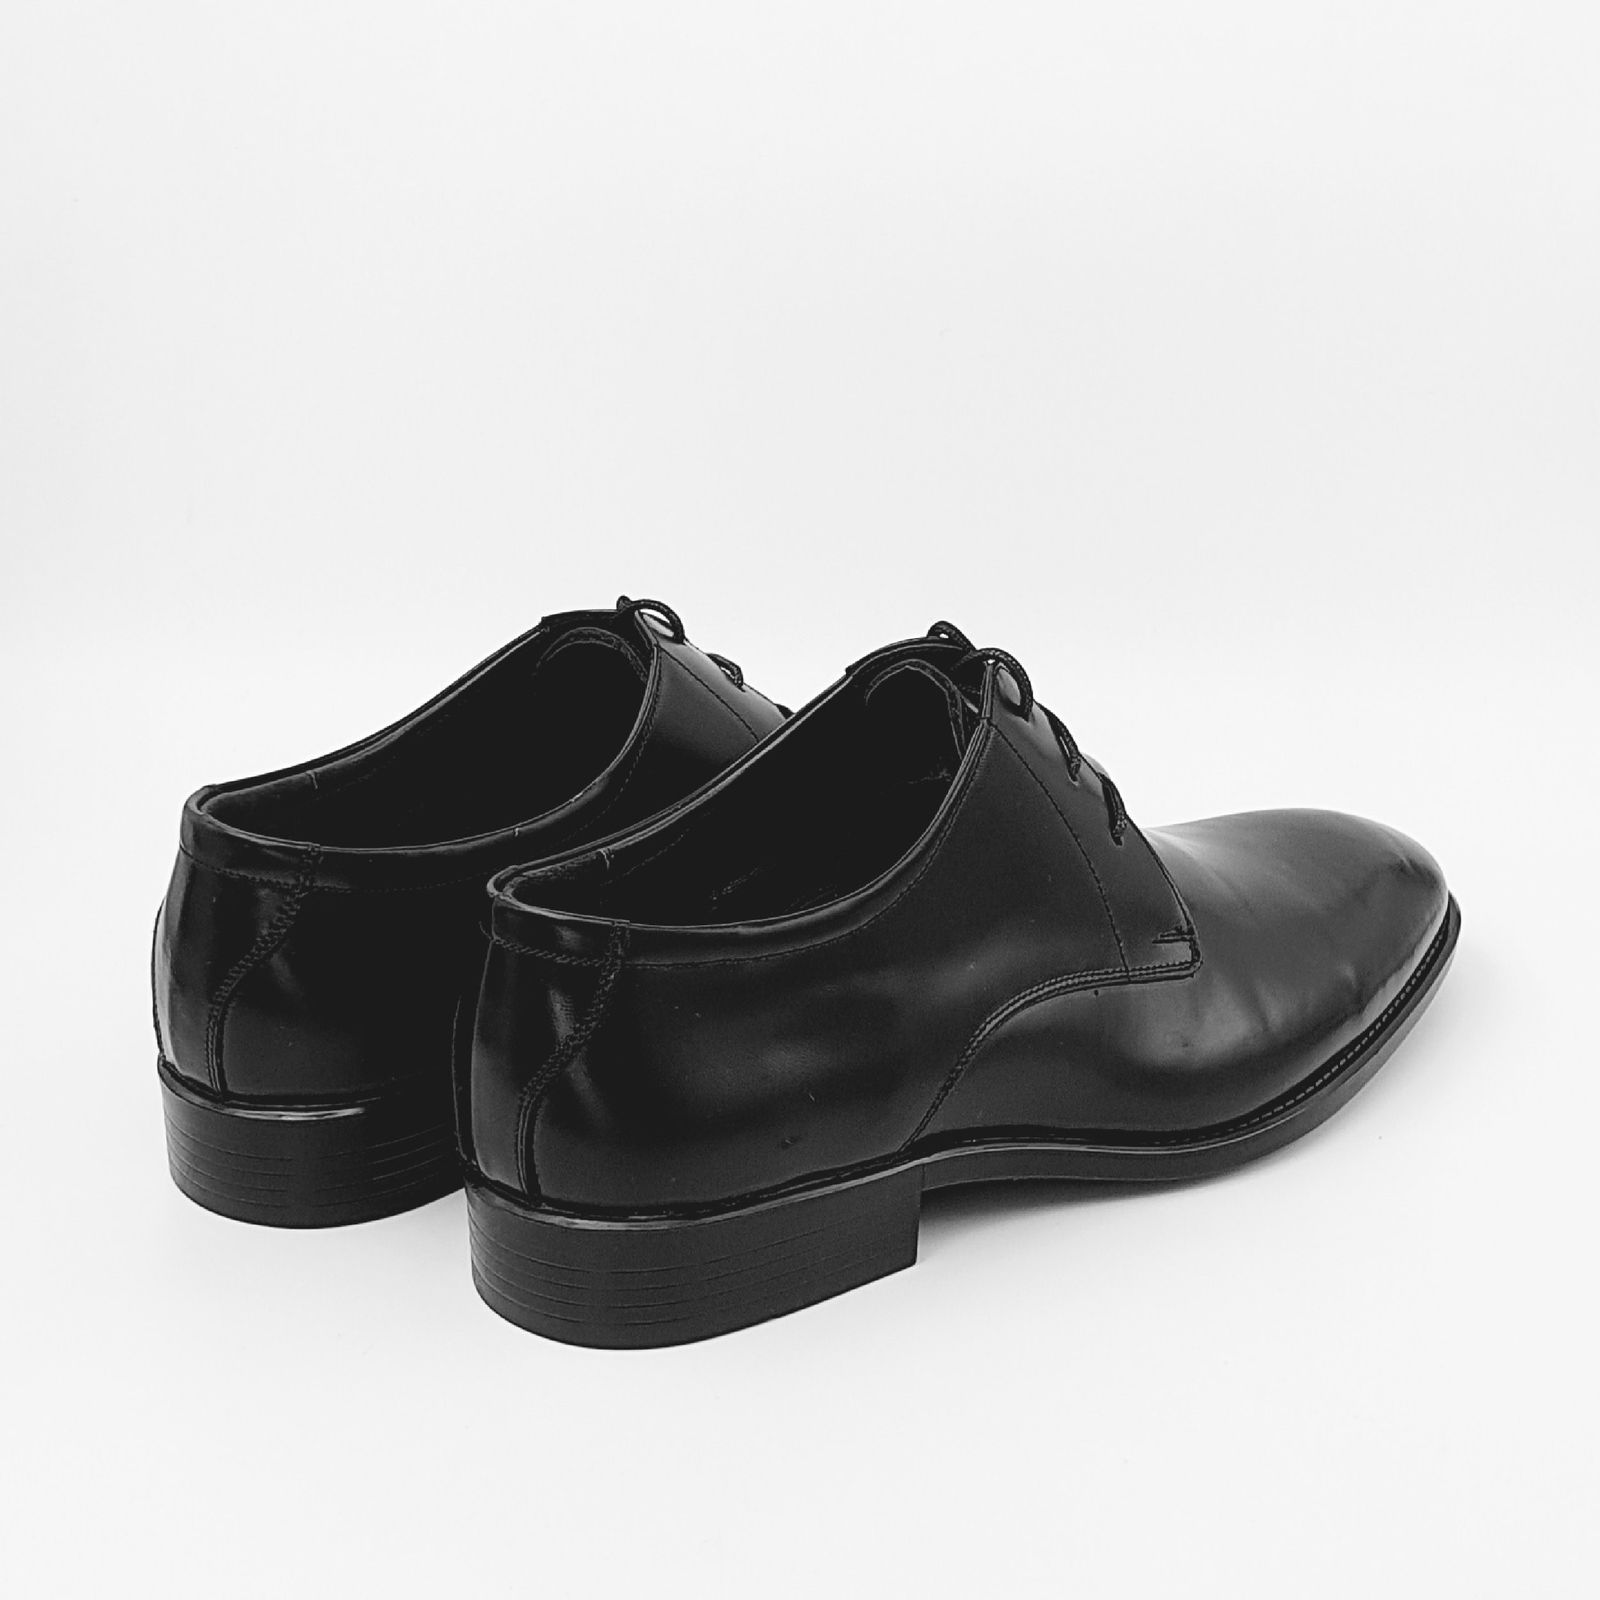 کفش مردانه گالا مدل BS کد D1109 -  - 4